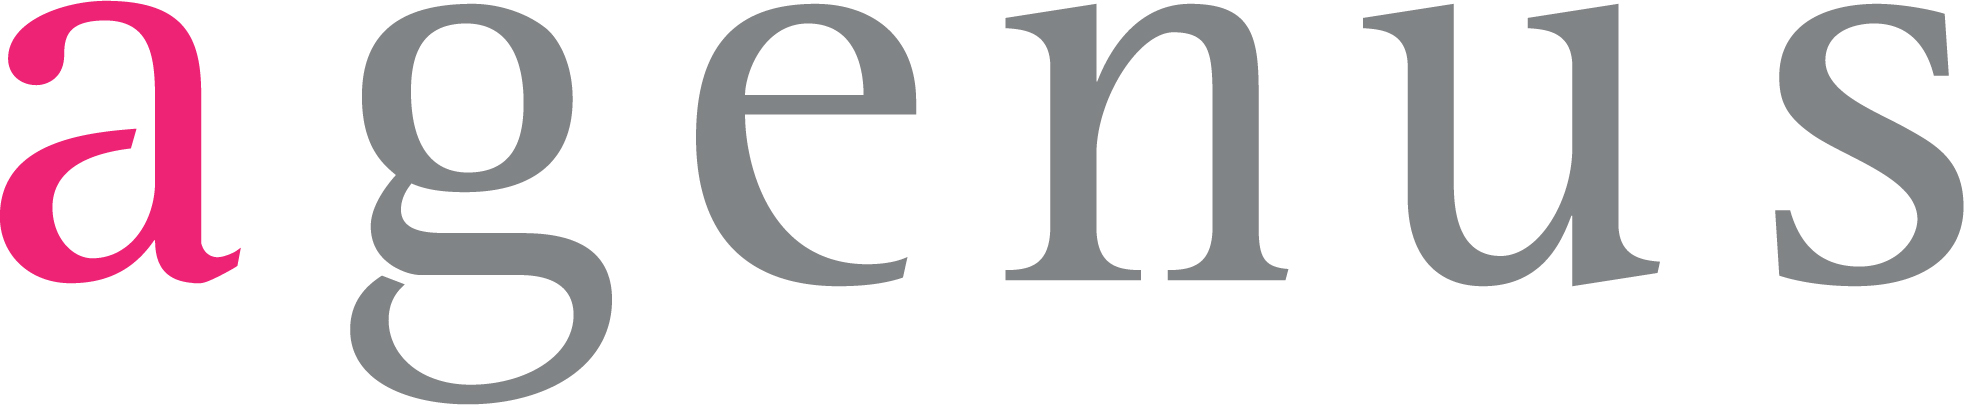 Agenus Inc. Logo